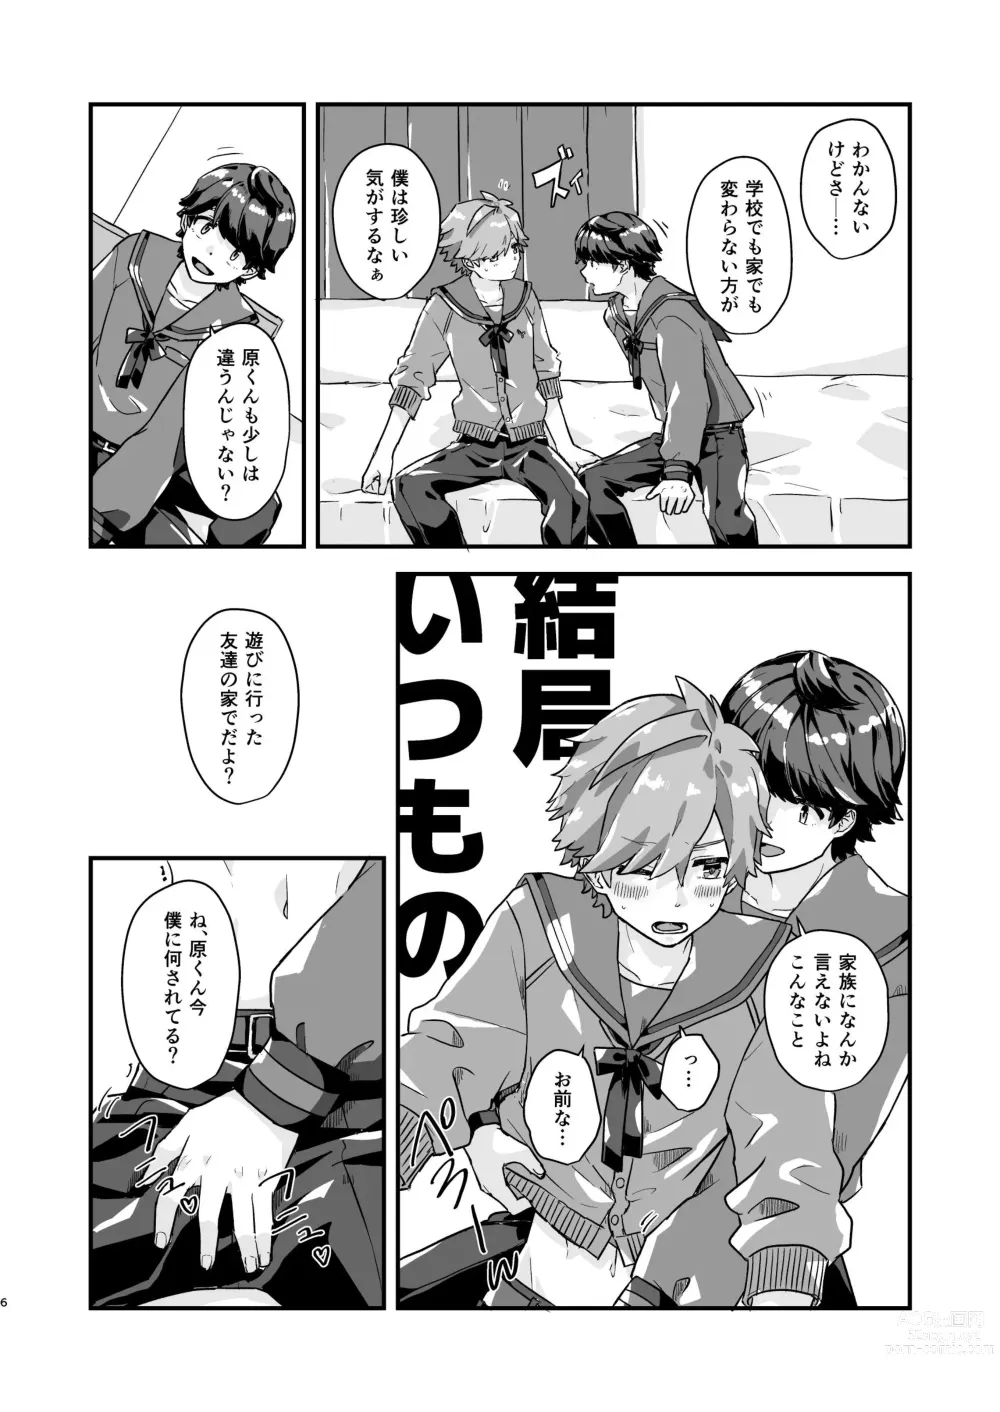 Page 6 of doujinshi Hibihara TAKE OUT!